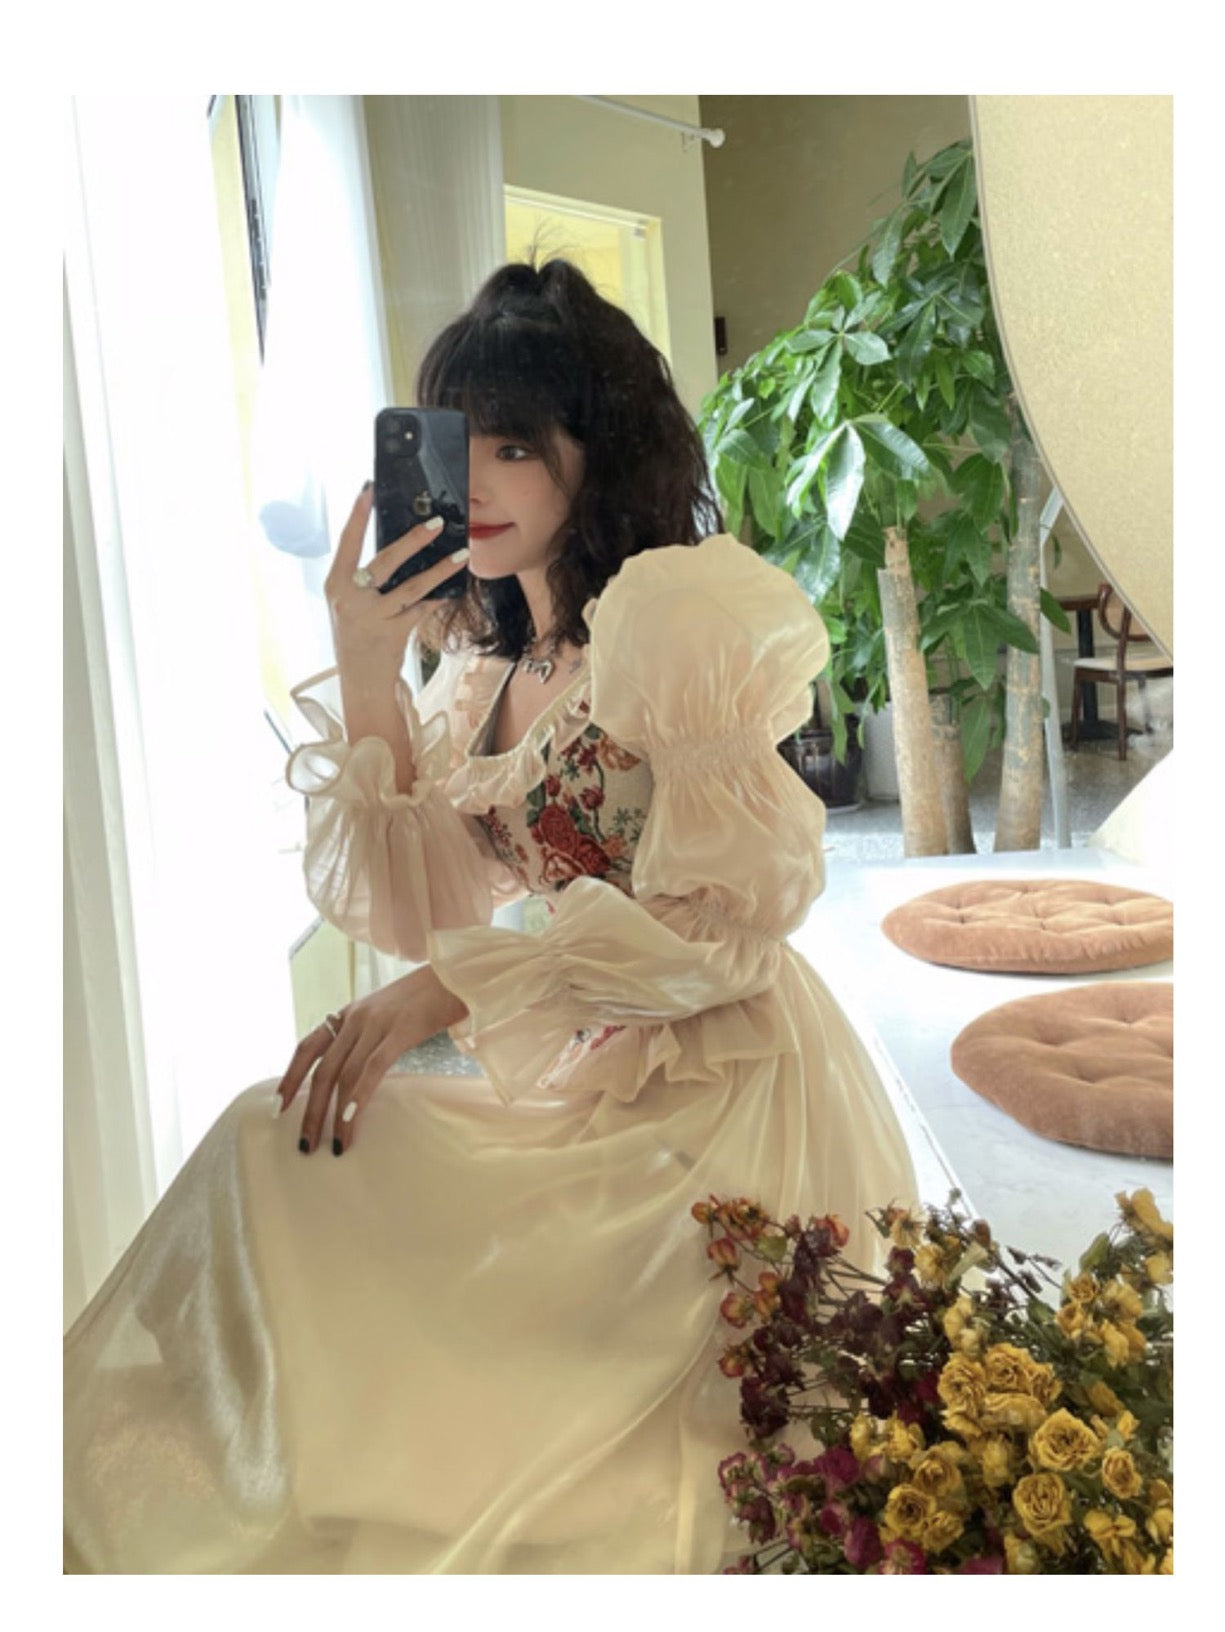 Golden Honeyflower Vintage-style Fairytale Princess Dress